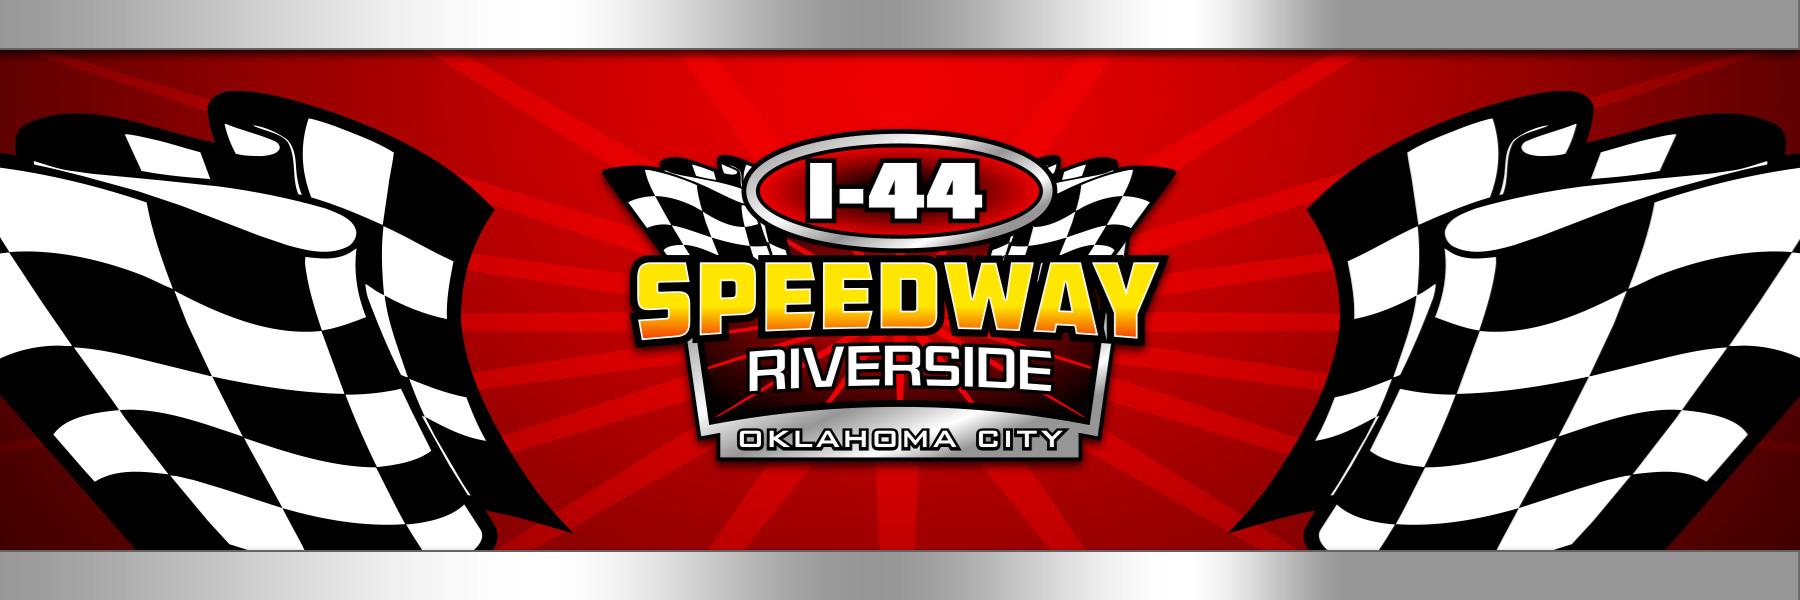 10/17/2020 - I-44 Riverside Speedway